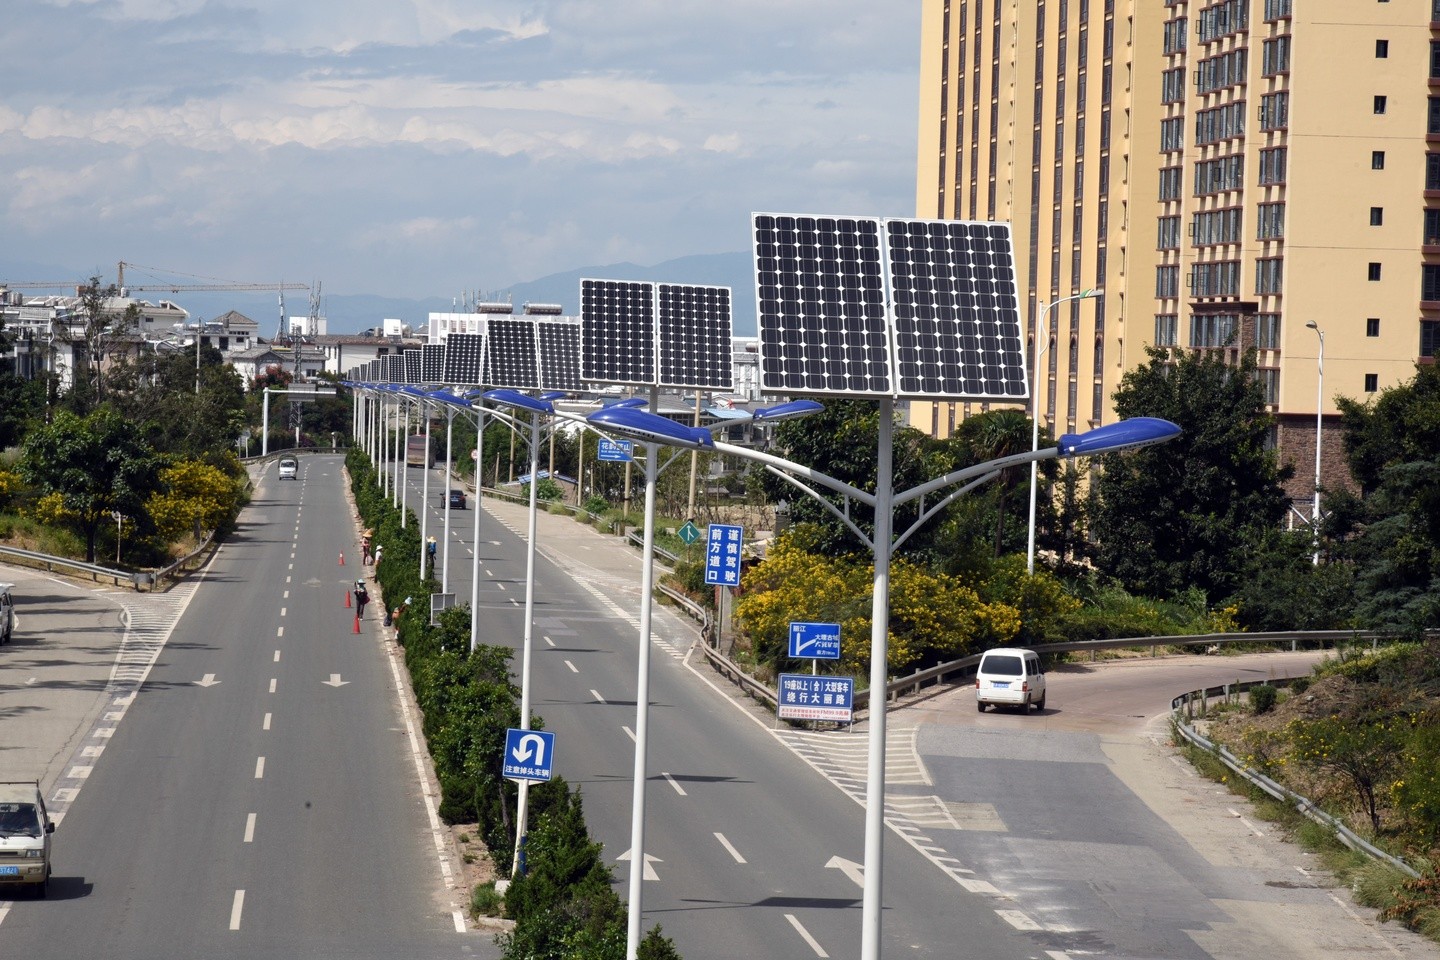 Solar LED lamp development in China